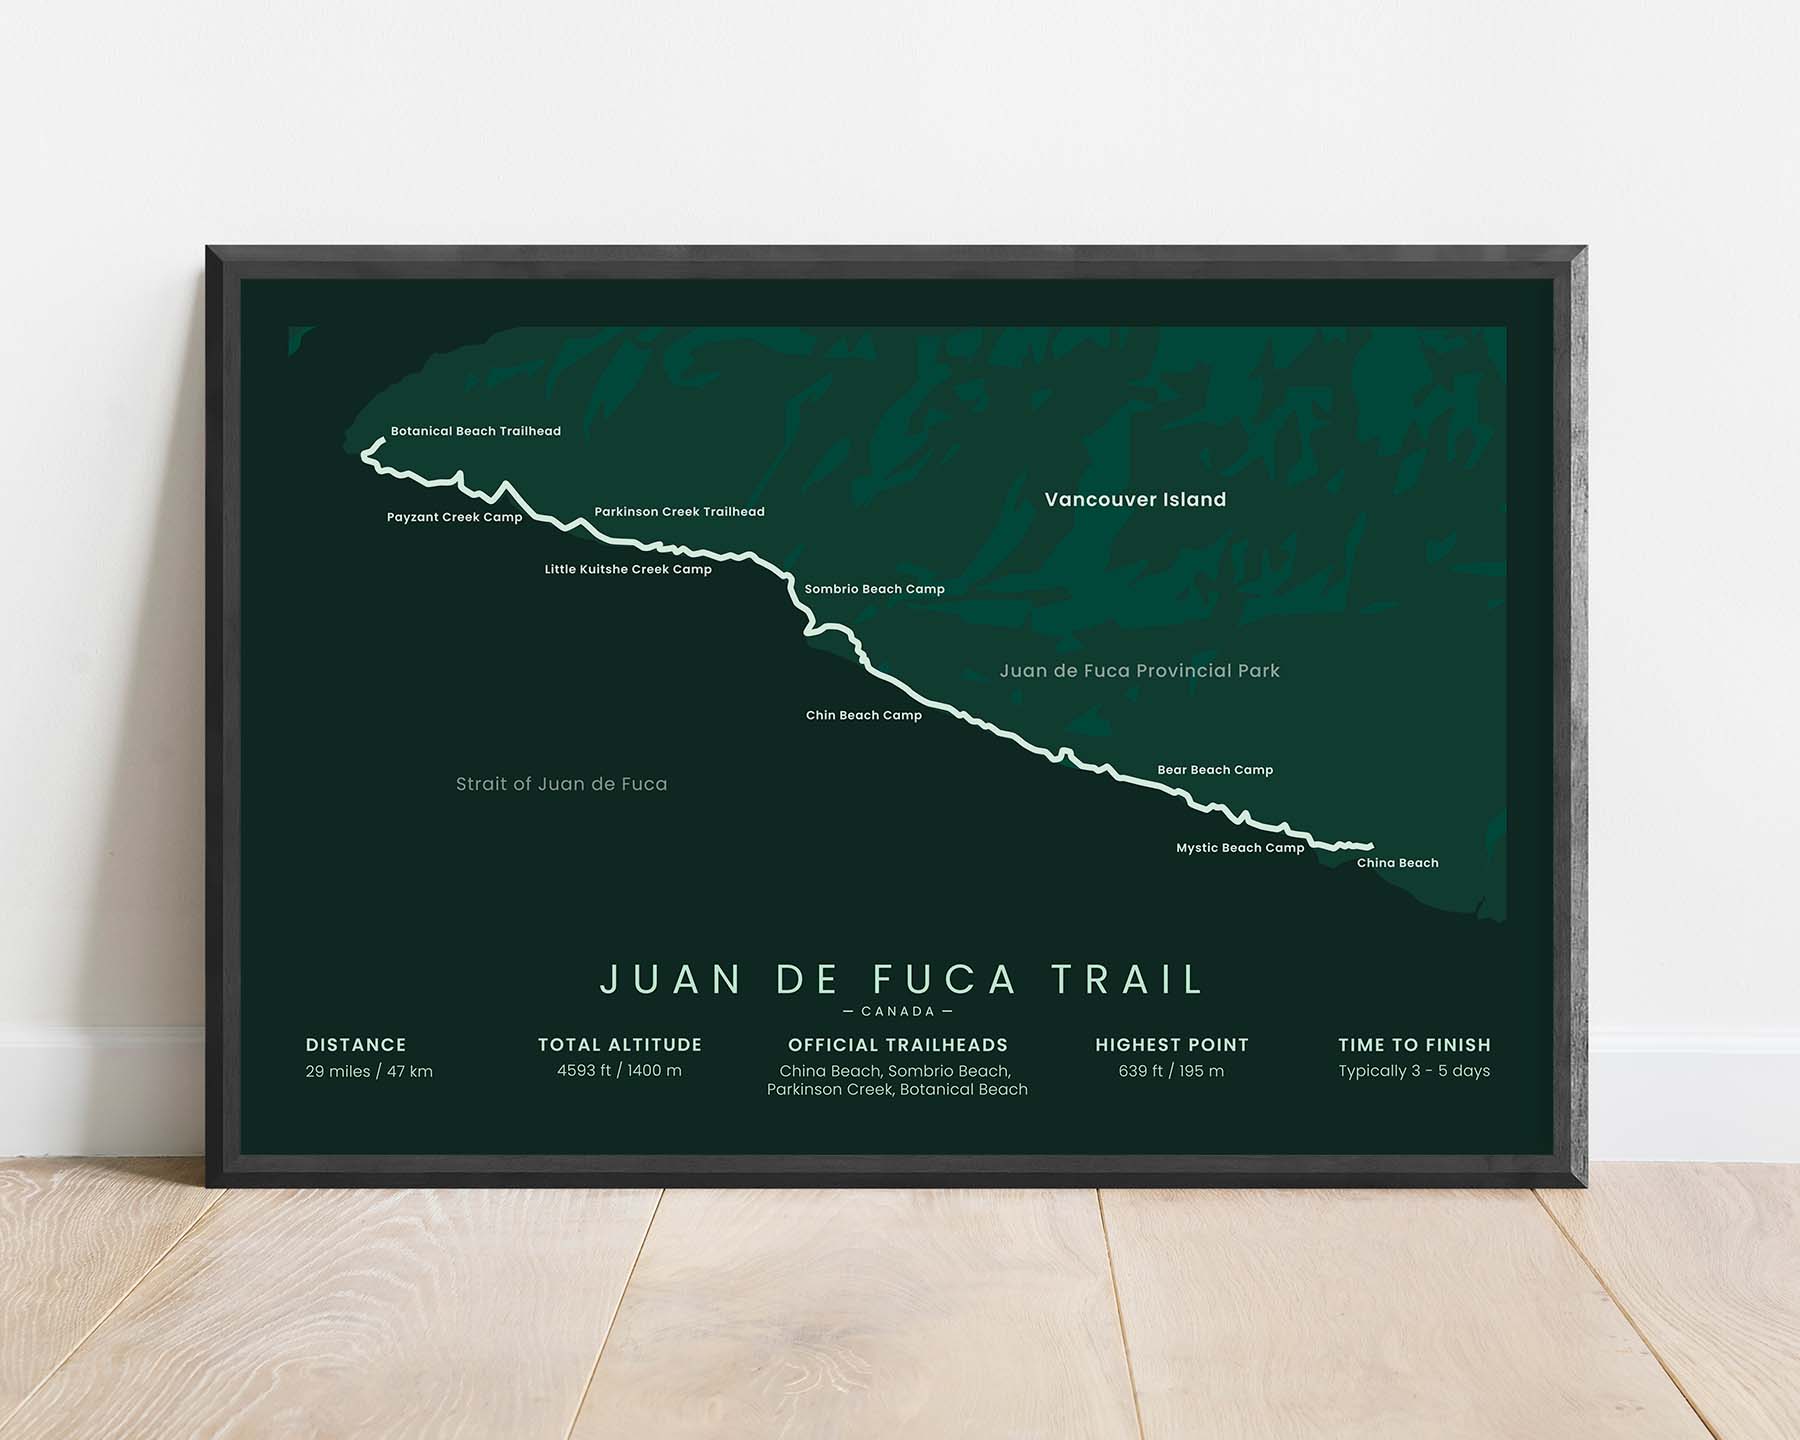 Juan de Fuca Trail (Canada, Sombrio Beach, Botanical Beach Trailhead to China Beach, Vancouver Island, Juan de Fuca Provincial Park) Track Map Art with Green Background